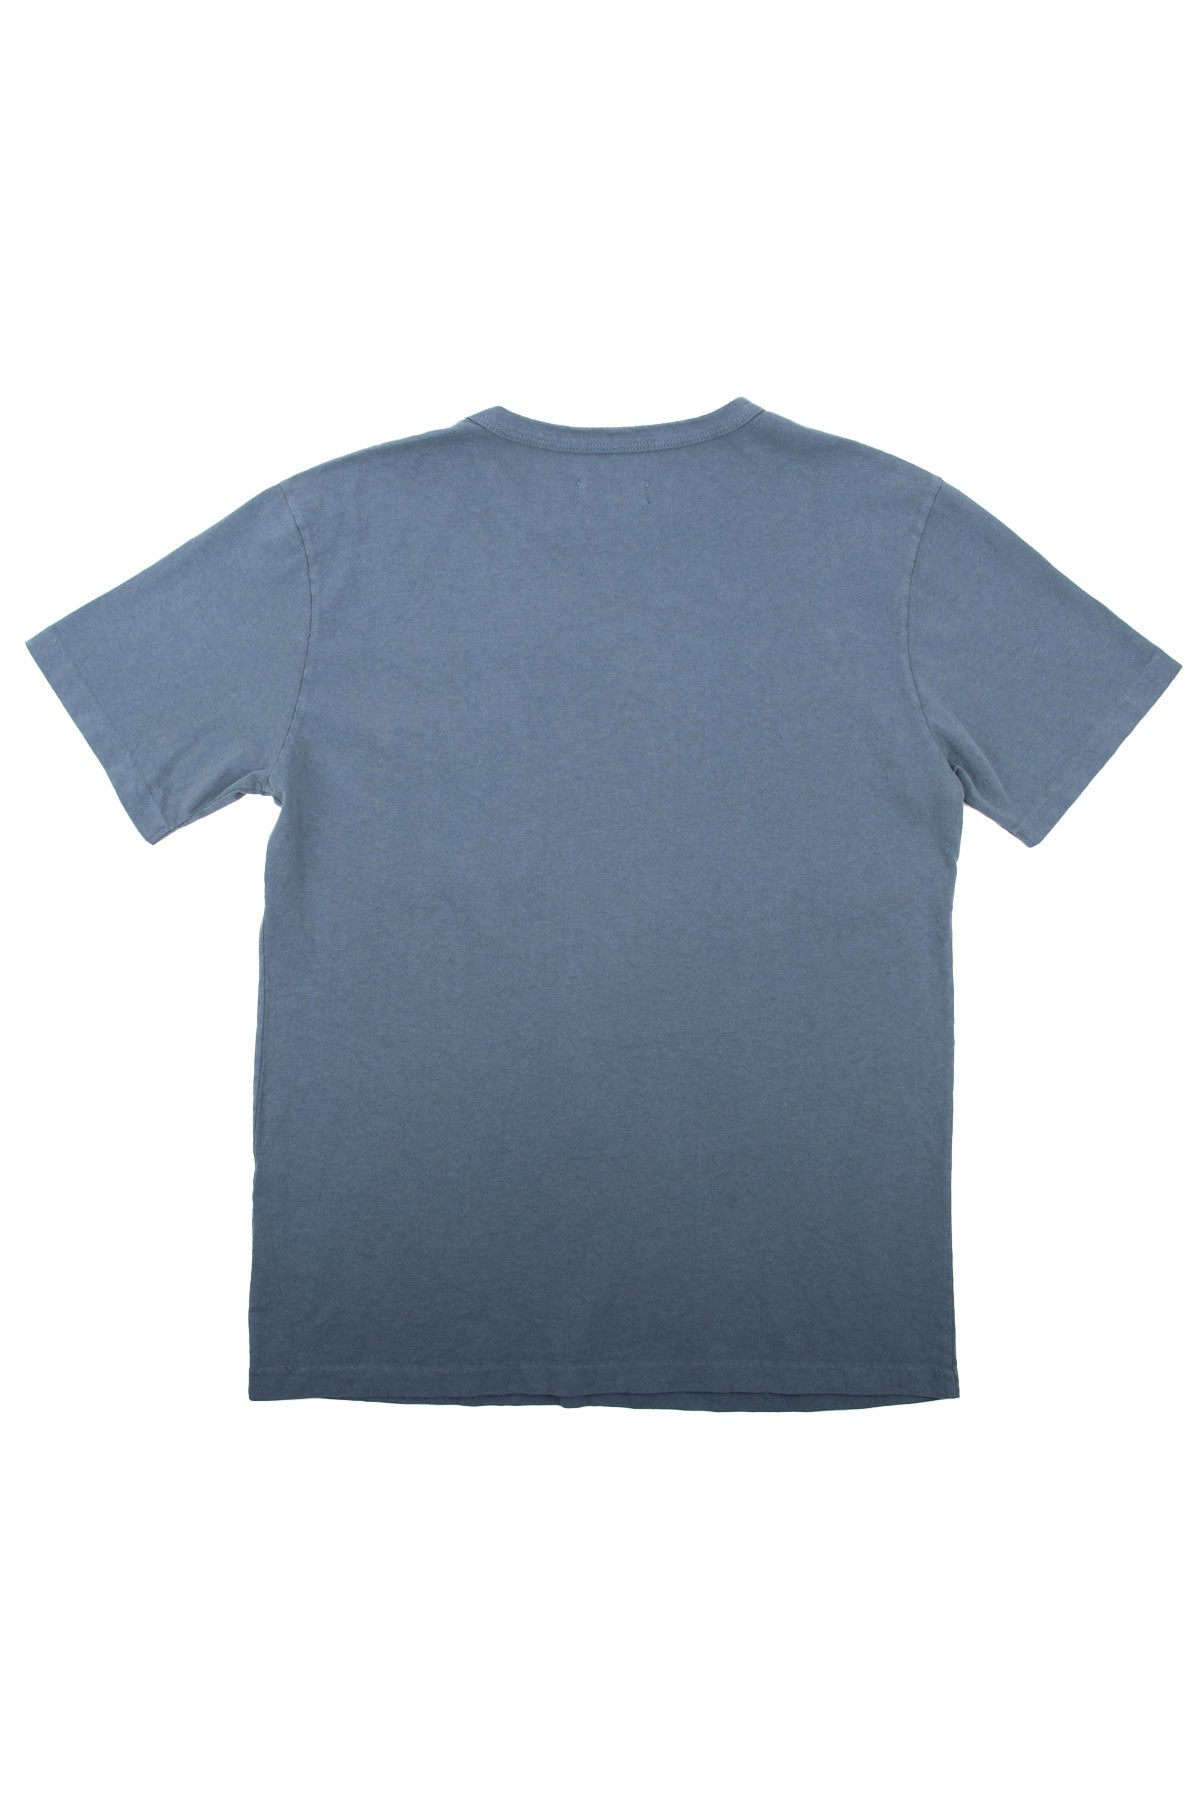 Freenote Cloth - 9 Ounce Pocket Tee - Faded Blue